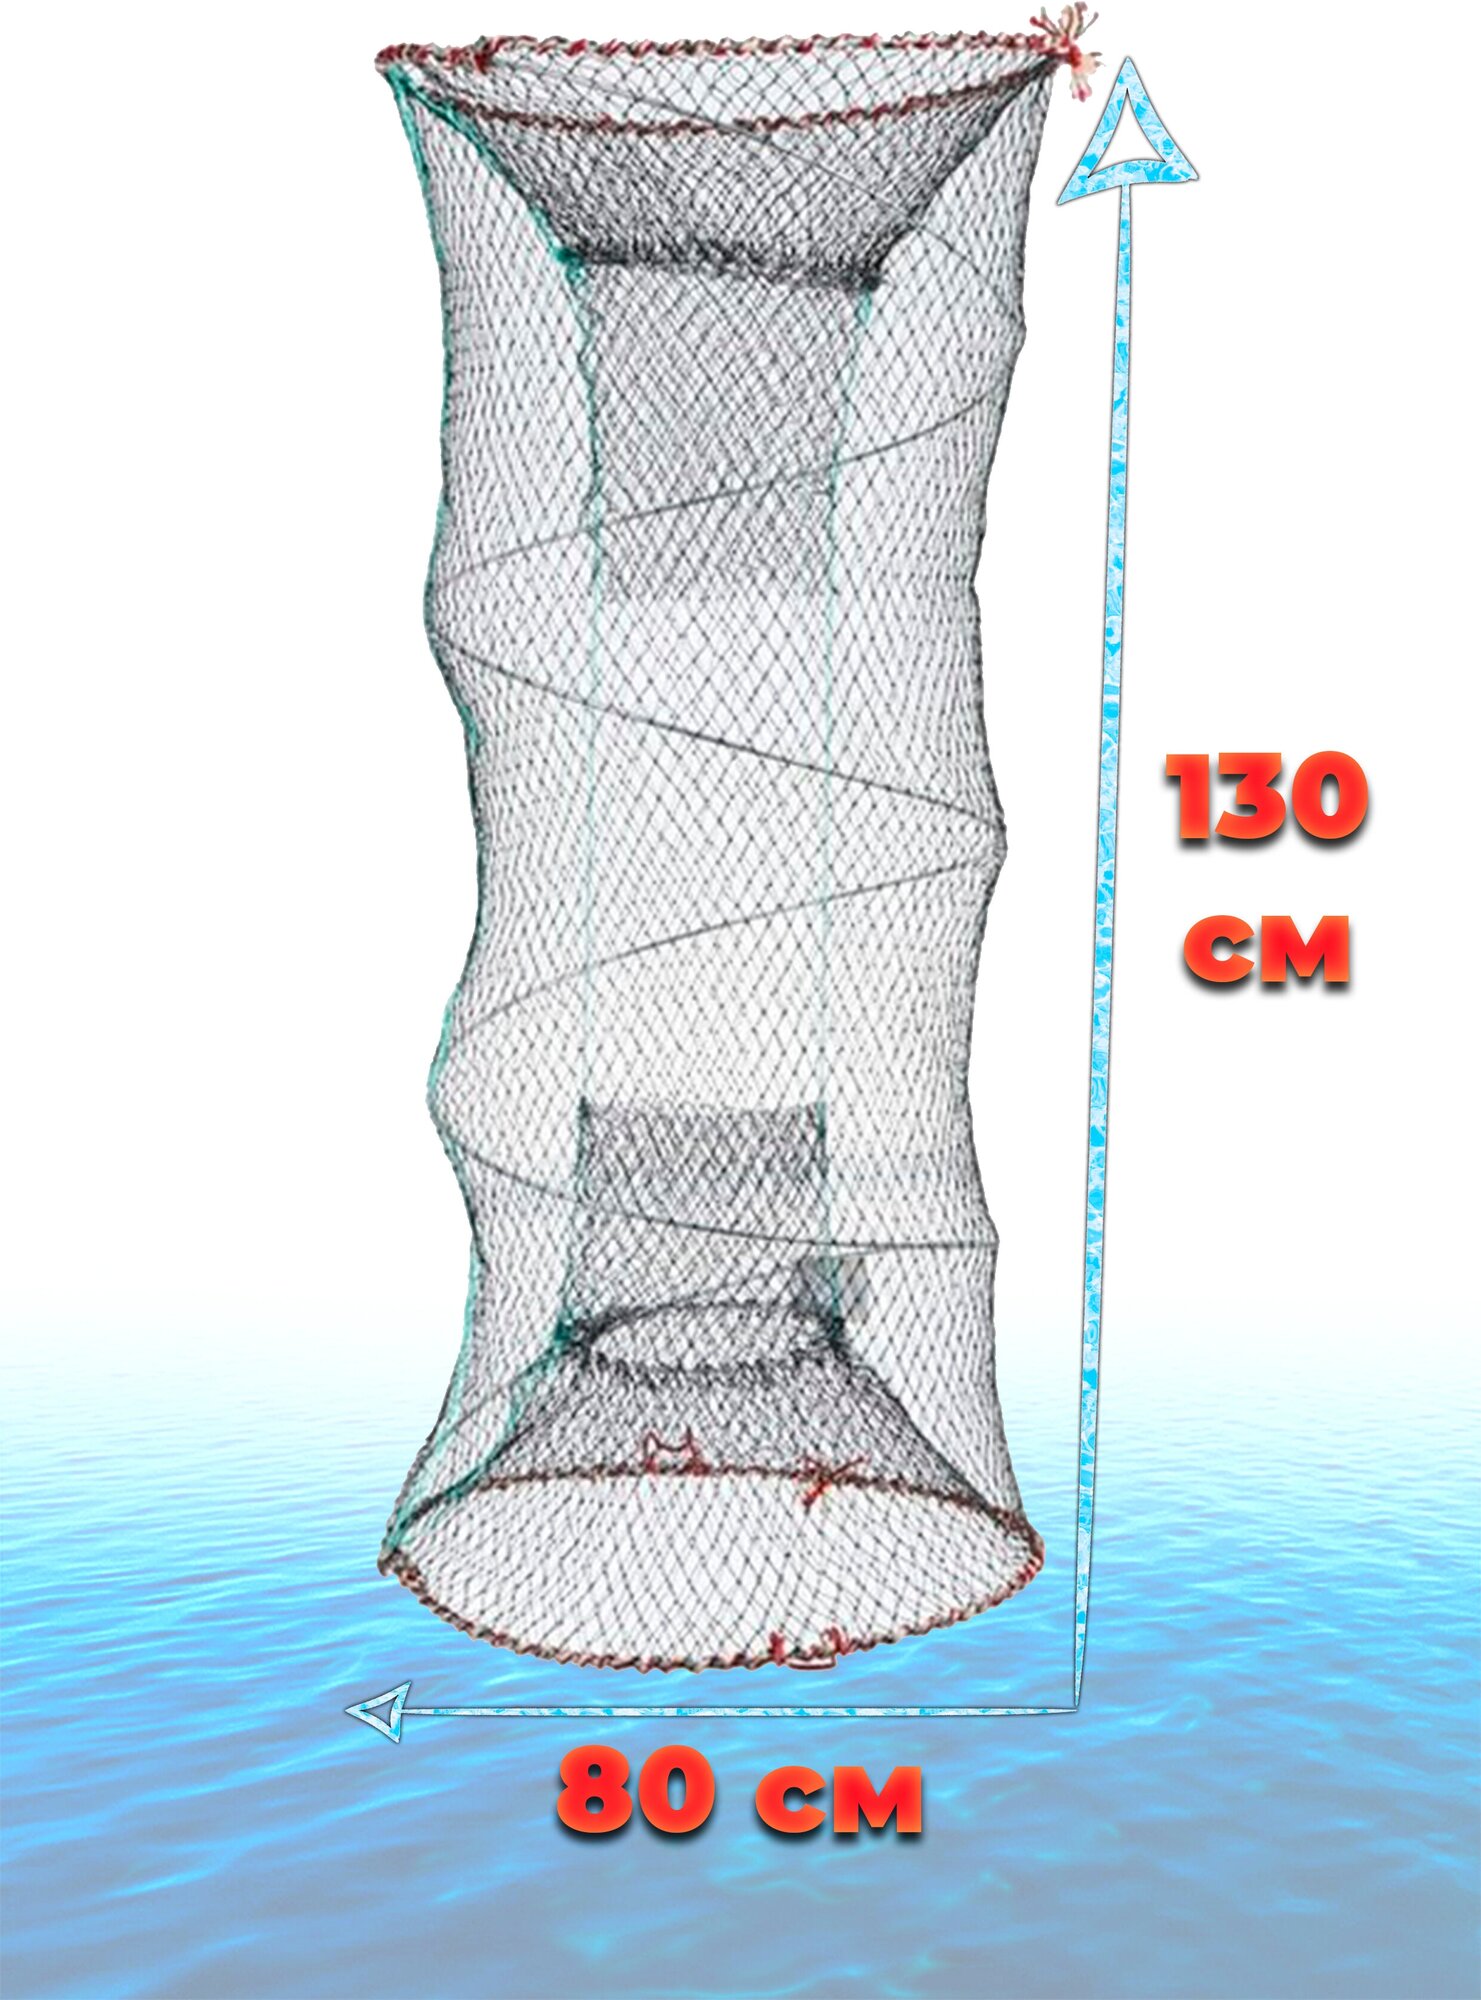 Верша рыболовная  раколовка длина 130 диаметр 80